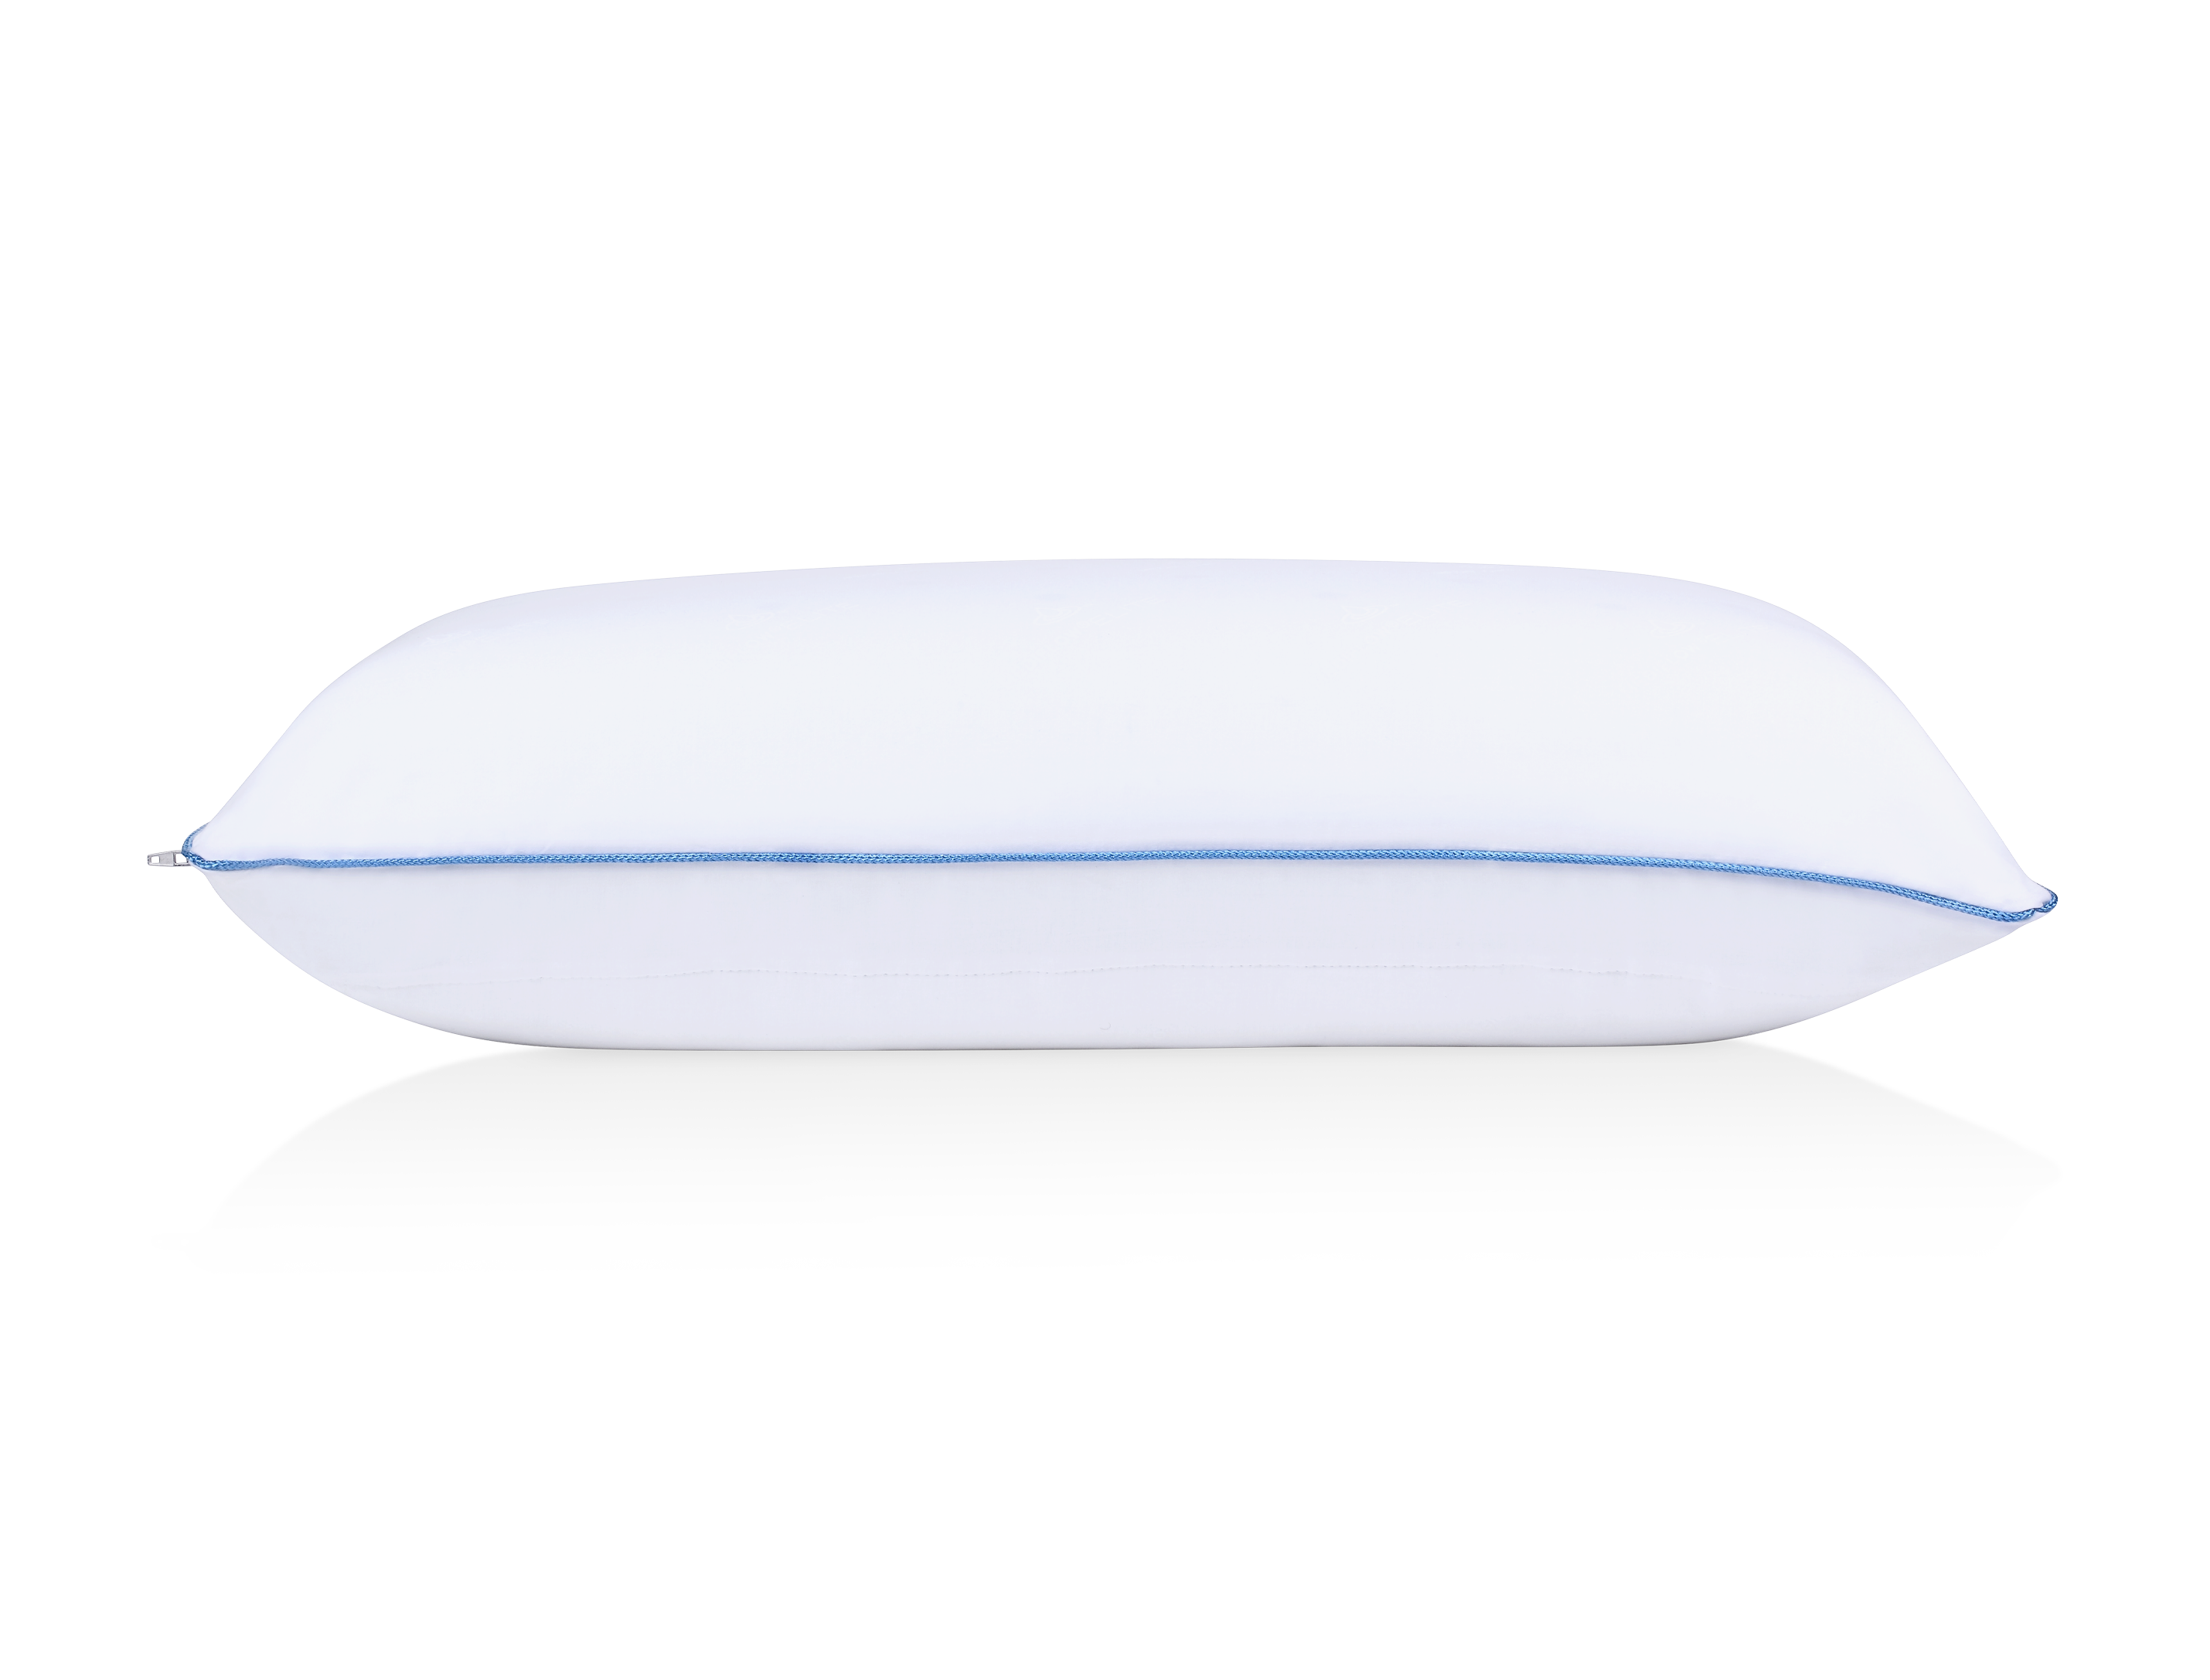 Mediflow Water Pillow - Elite Cooling Memory Foam